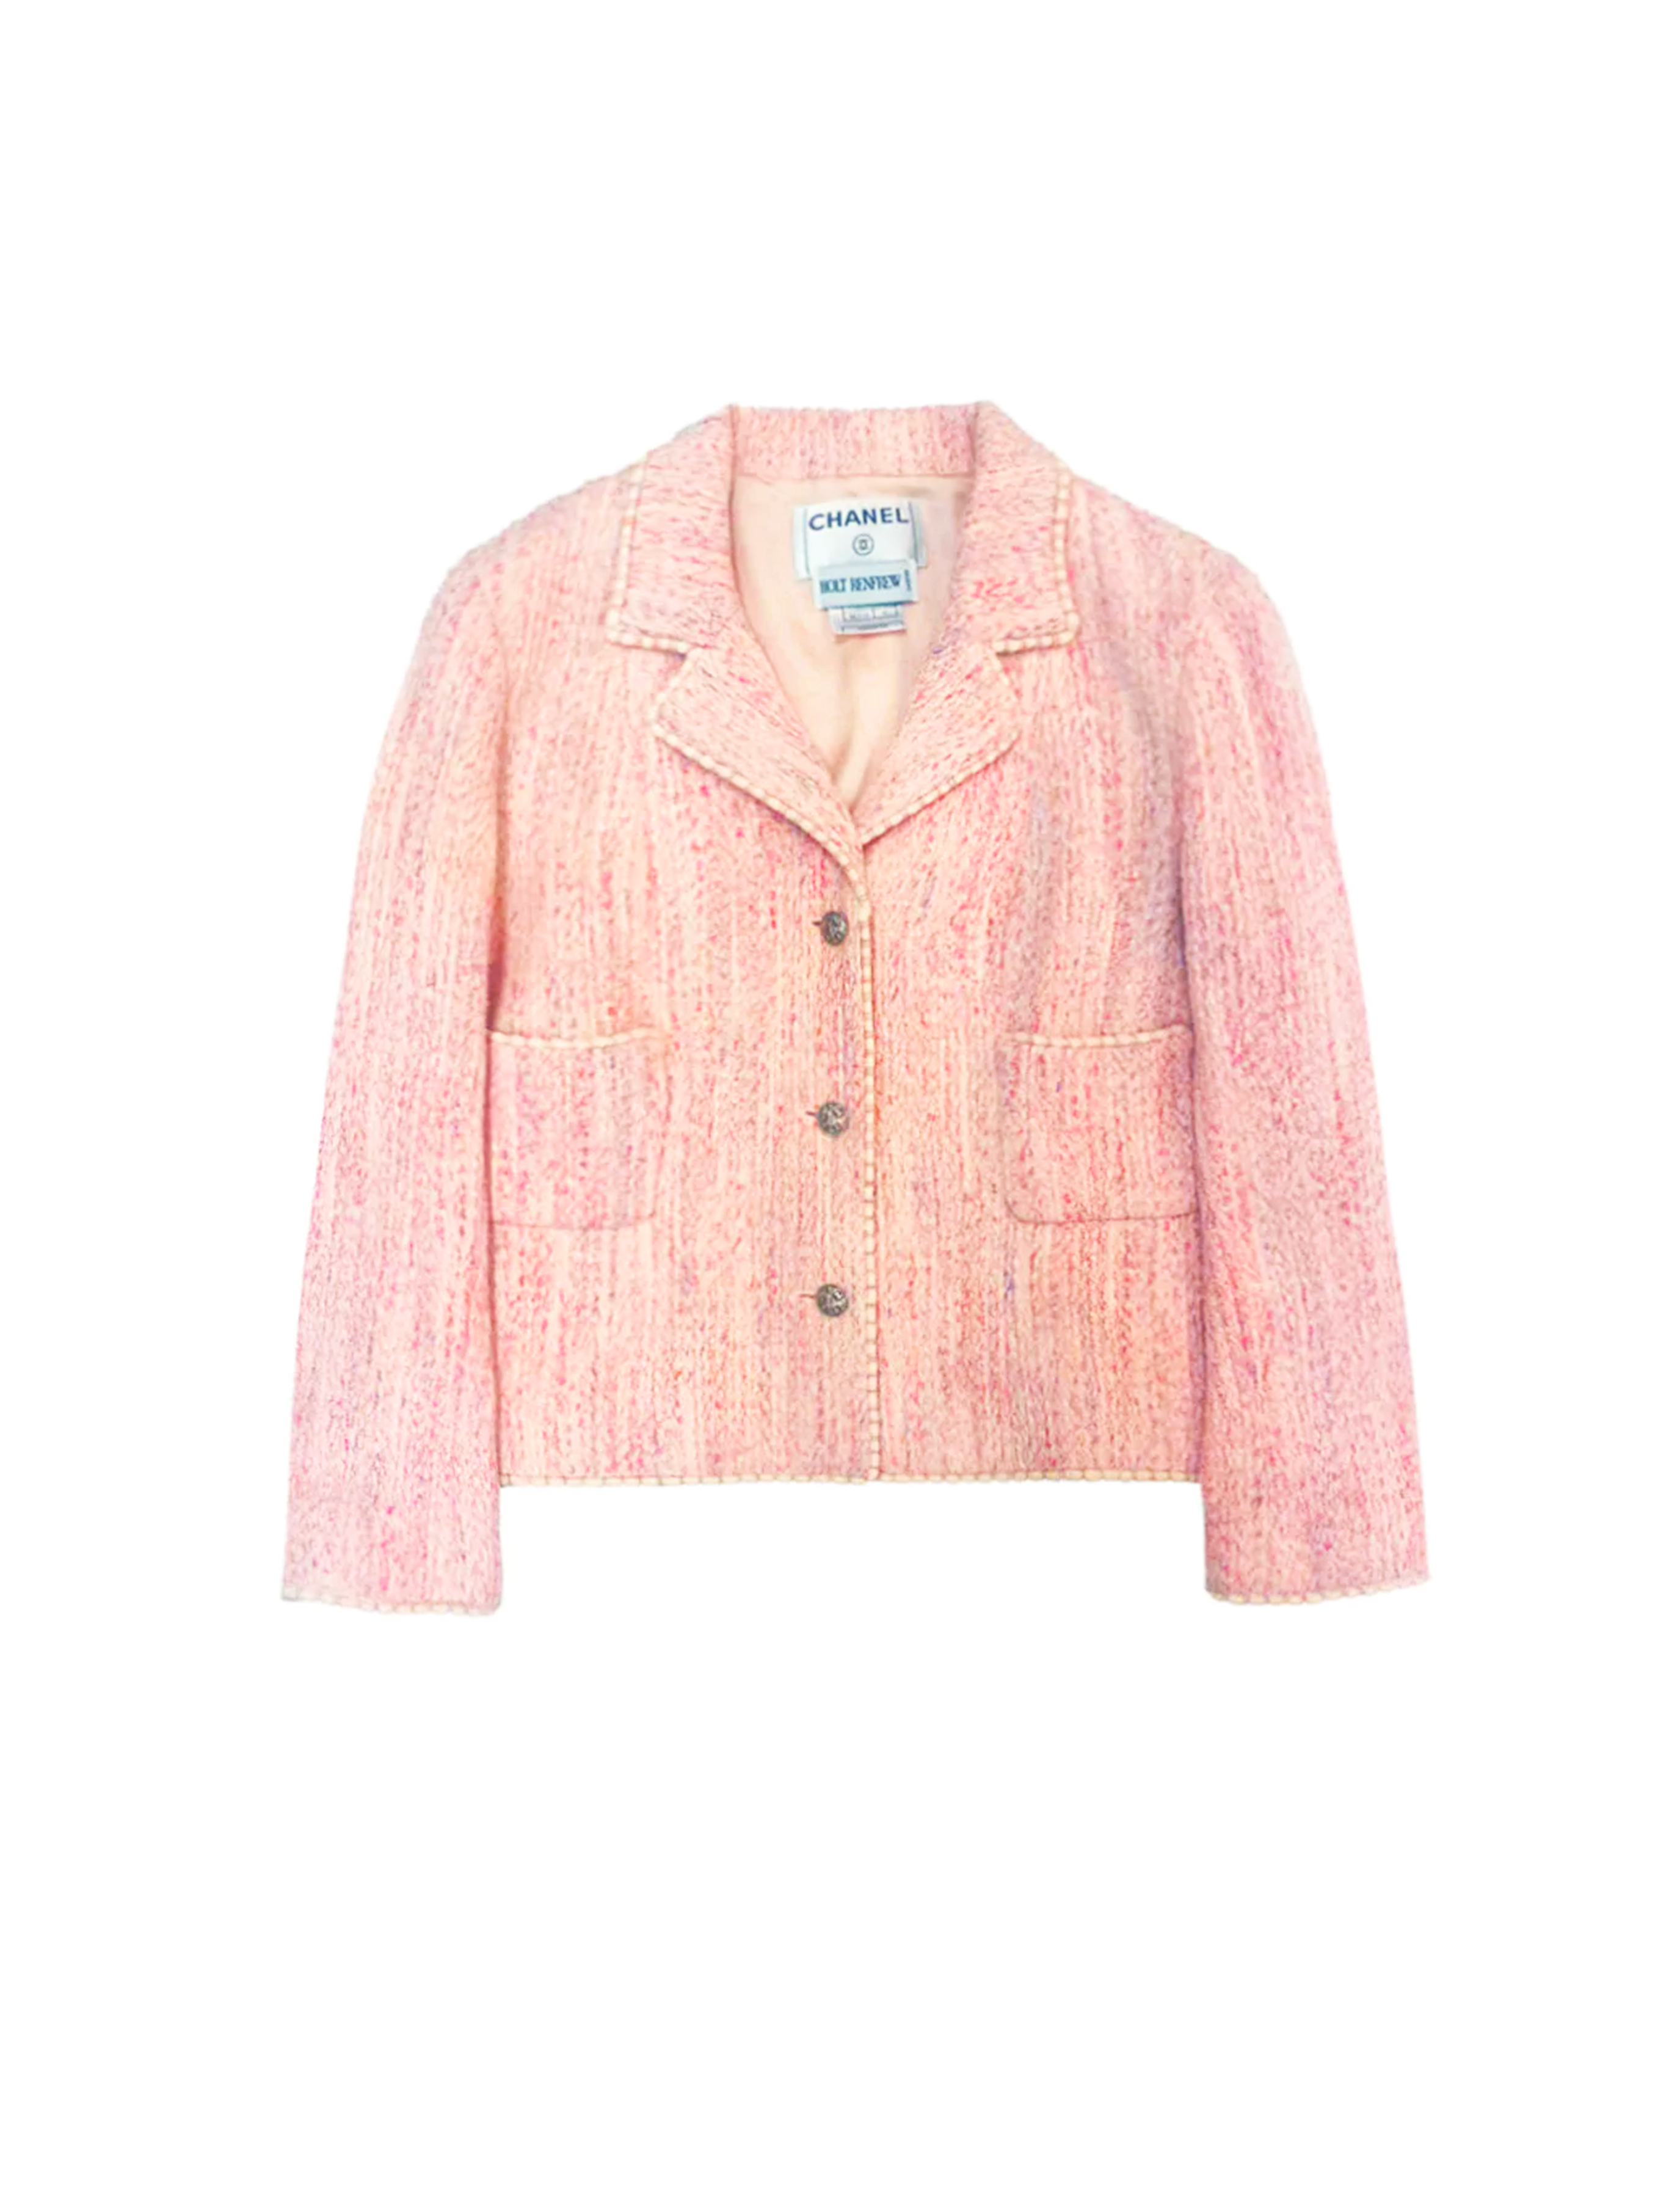 1990s Chanel Pink Tweed Jacket Mini Skirt Set